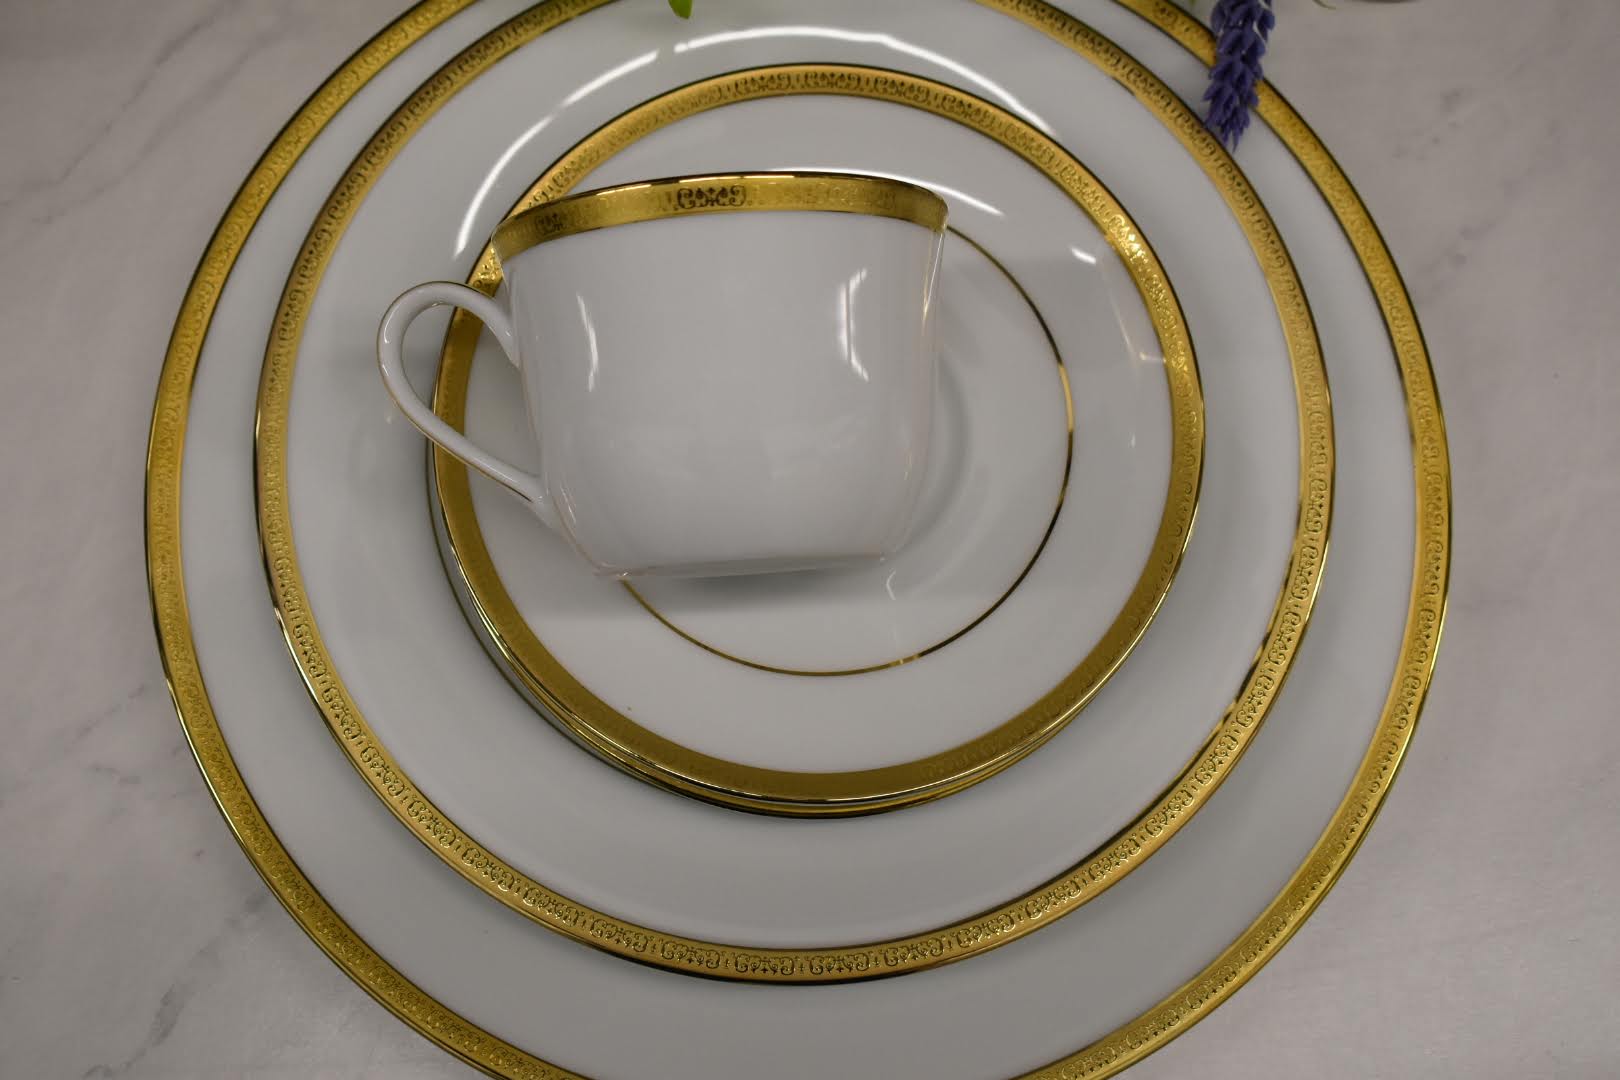 Golden Rim  Etched Design Gold Band - 5-Piece Dinner Set - 1 place setting - Fine Porcelain China - White Color